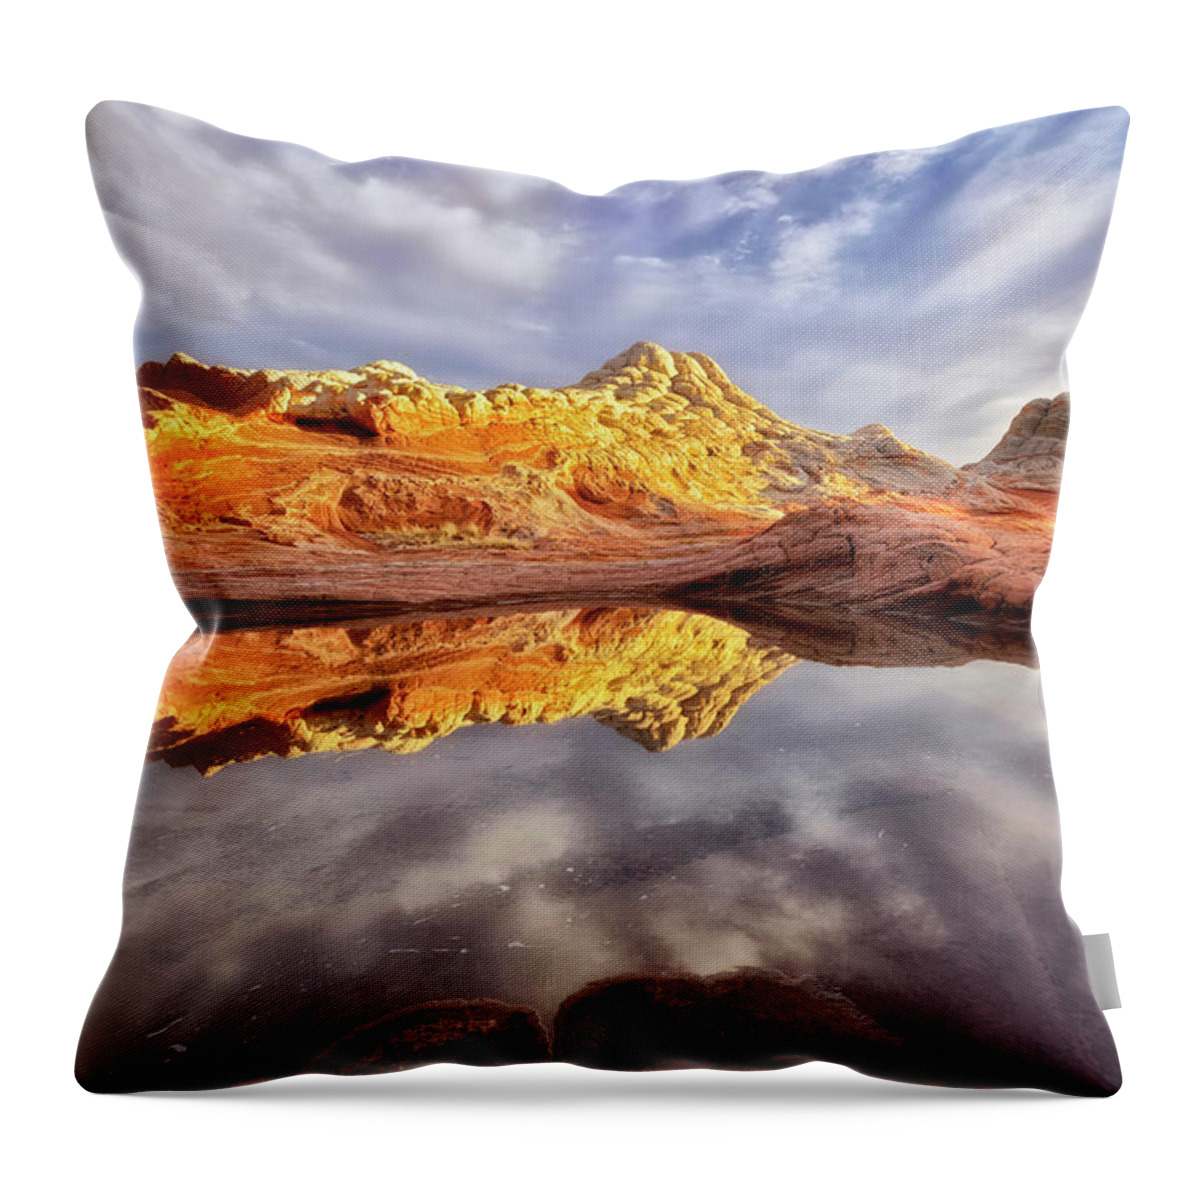 Sunset Throw Pillow featuring the photograph Desert Rock Drama by Nicki Frates